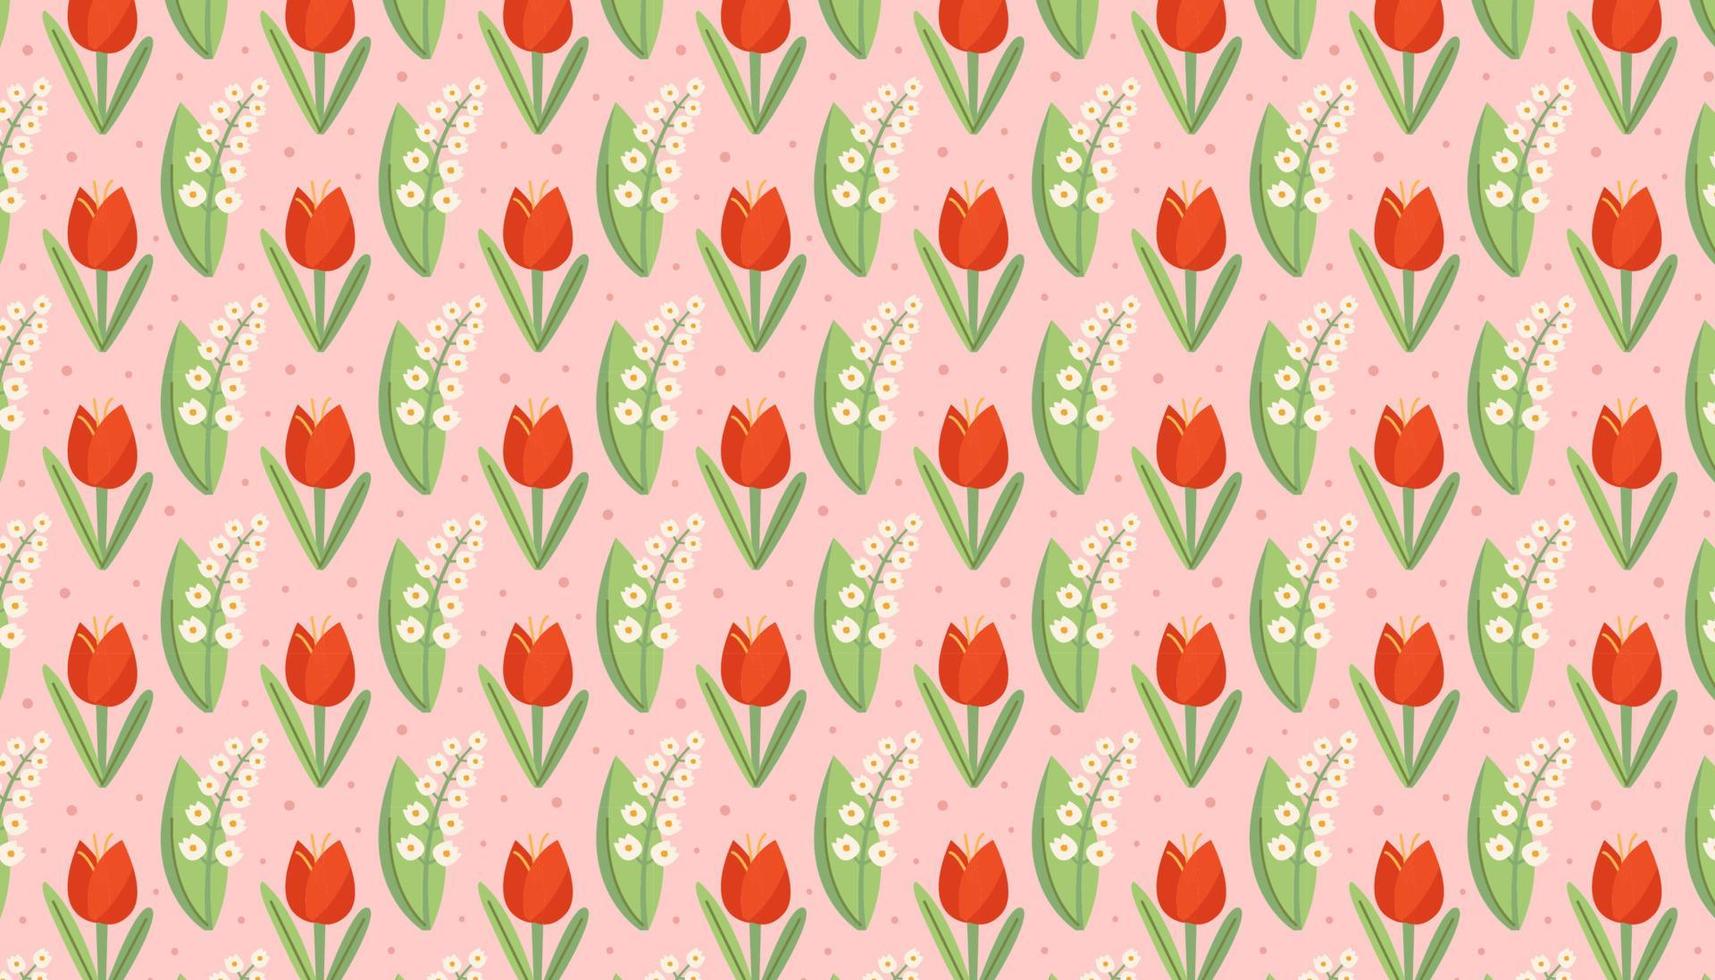 campanilla de invierno tulipán patrón floral natural textura fondo banner diseño de empaque vector